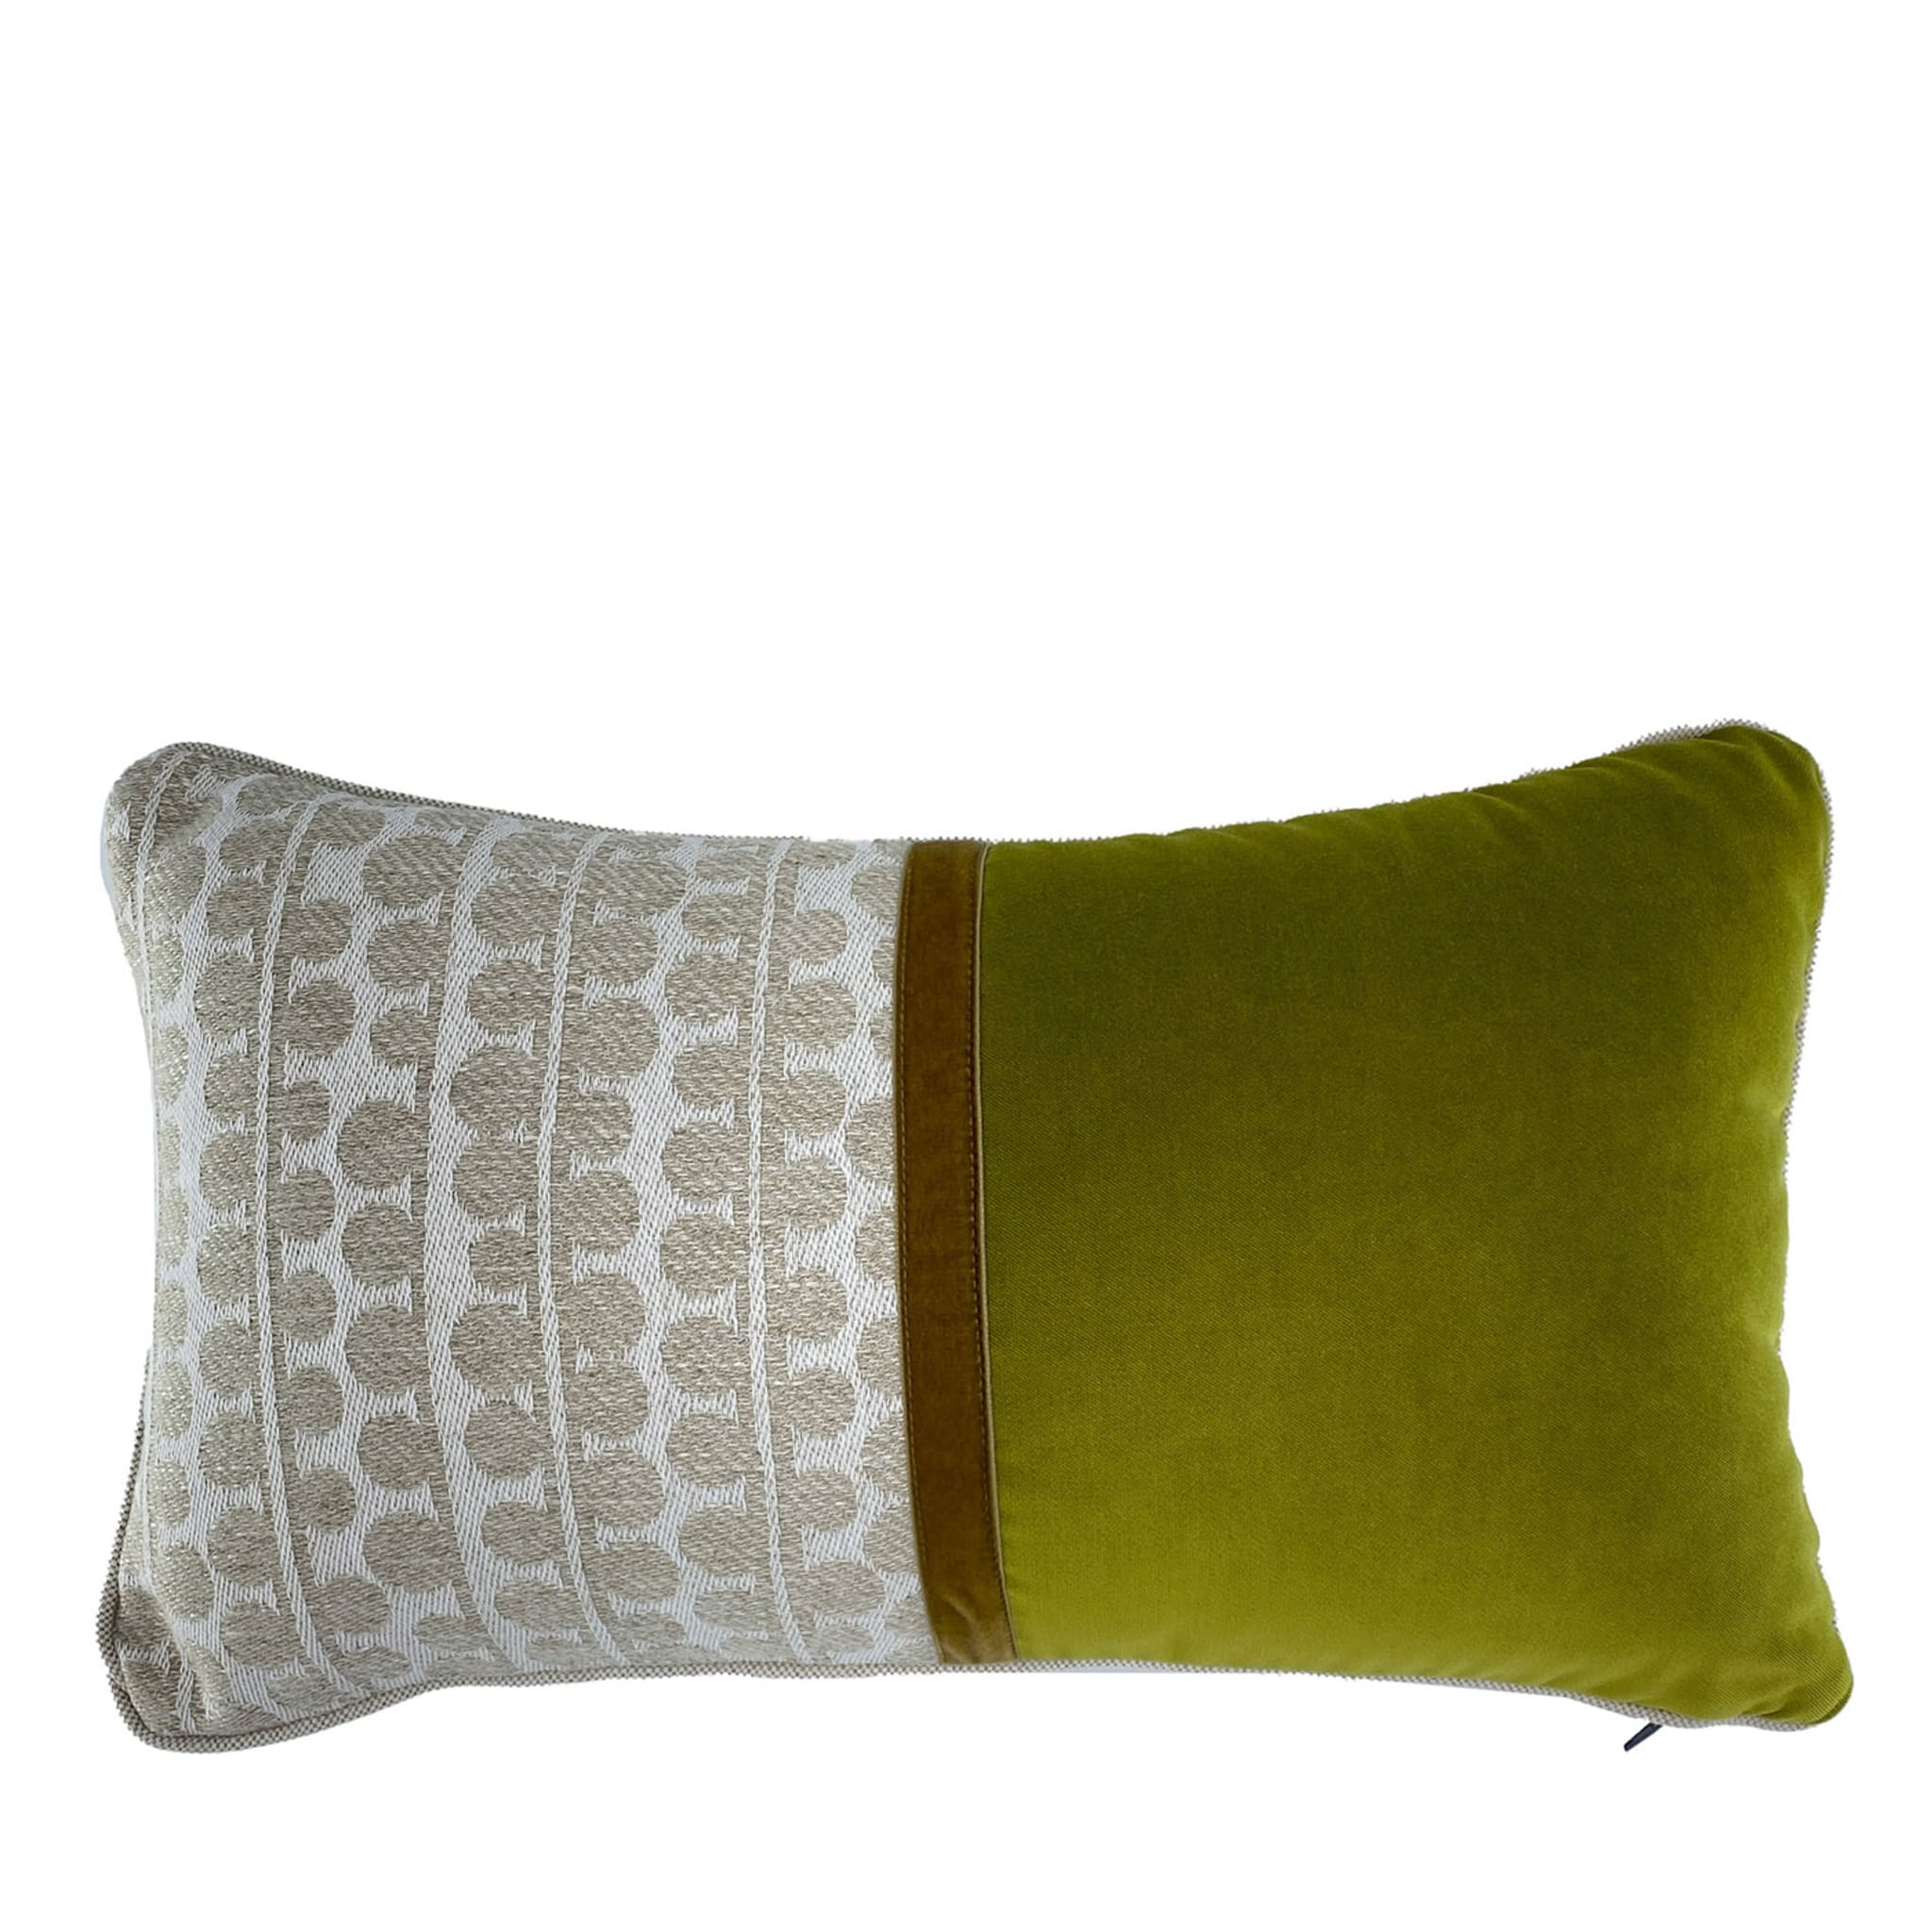 Bouclé Patterned Ecru/Olive Green Rectangular Cushion - Main view